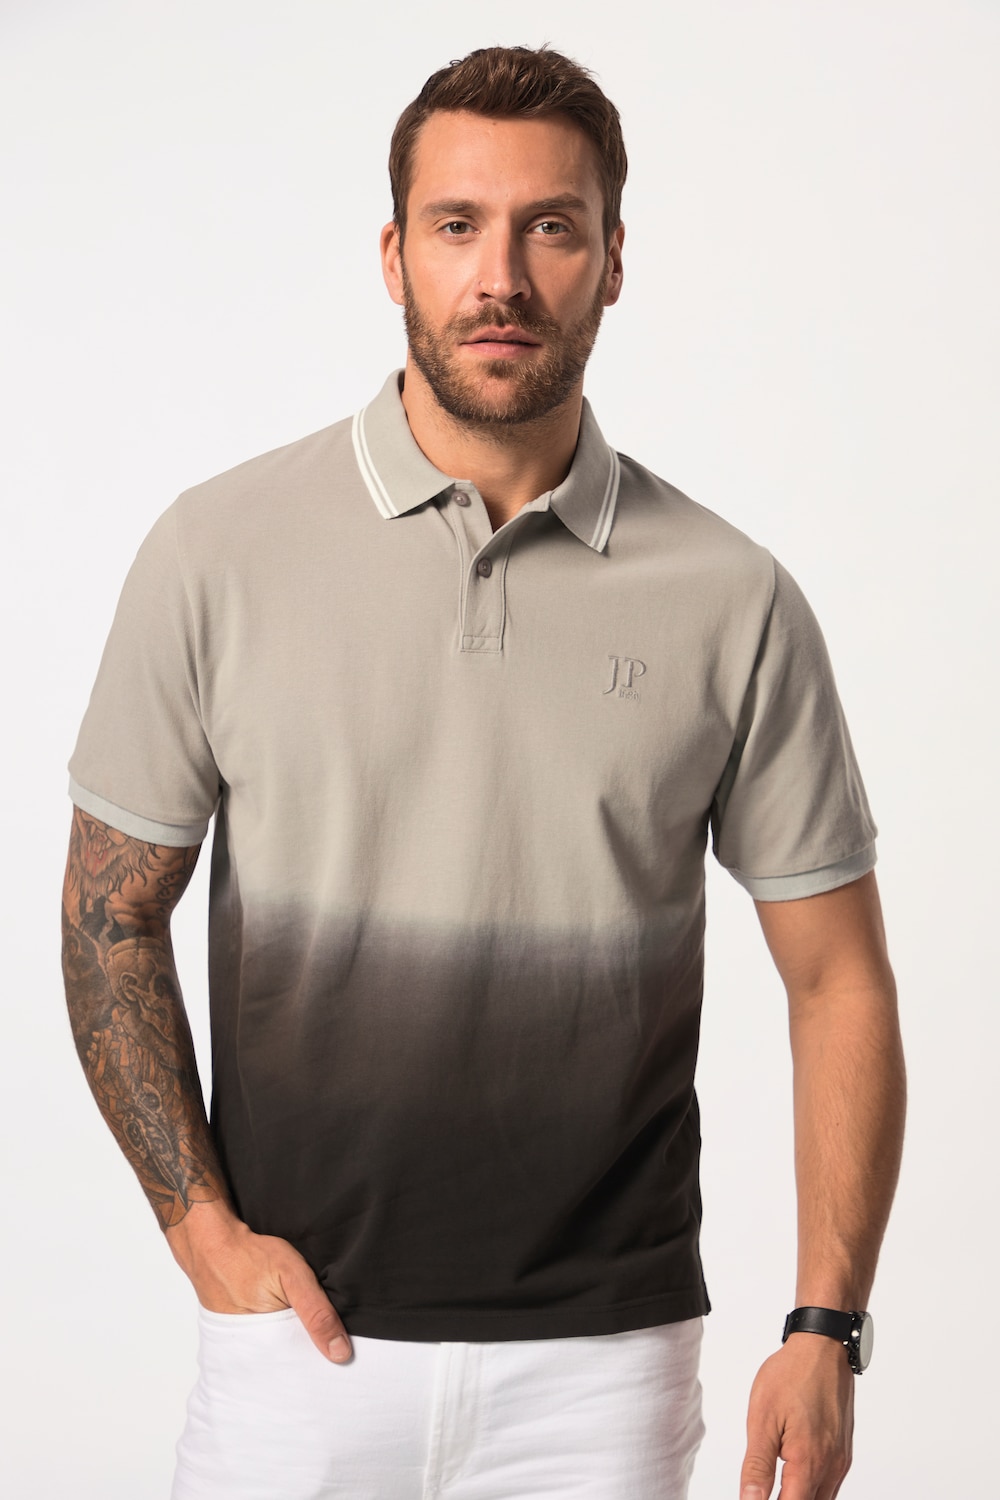 Große Größen JP1880 Polo-Shirt, Herren, grau, Größe: XL, Baumwolle, JP1880